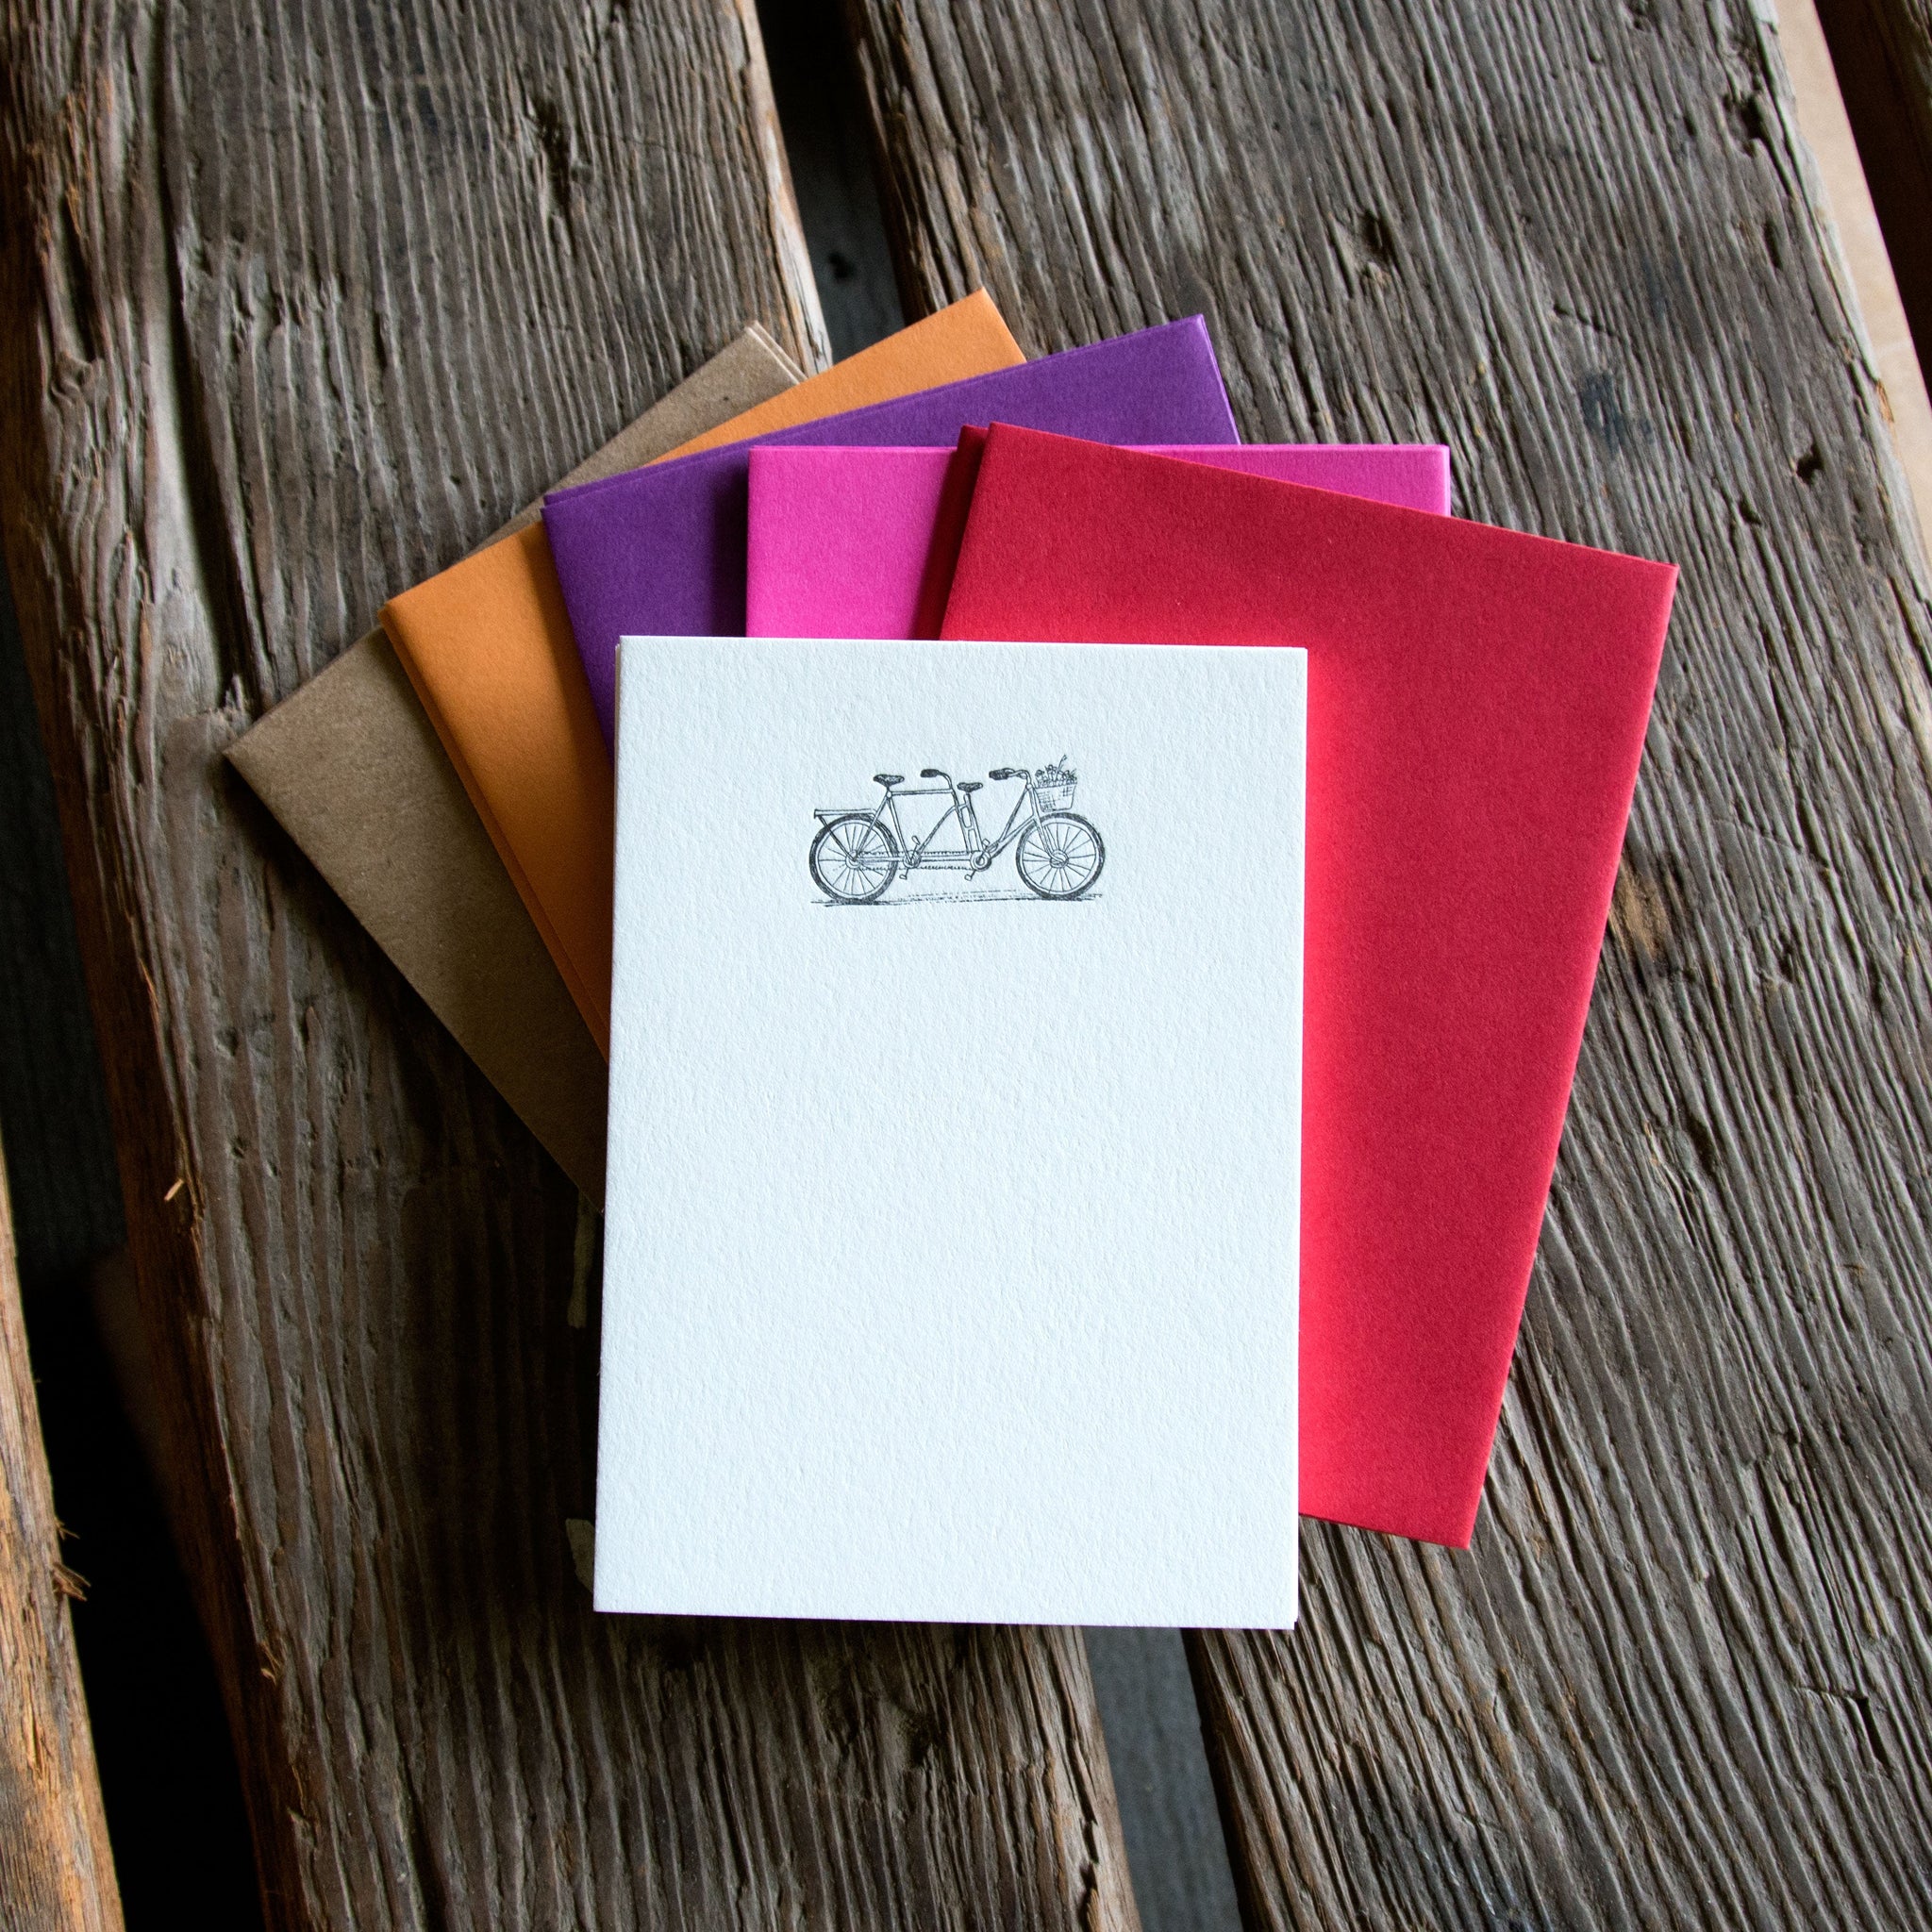 Love Tandem Bike Stationery Set, 10 pack, letterpress printed eco friendly.